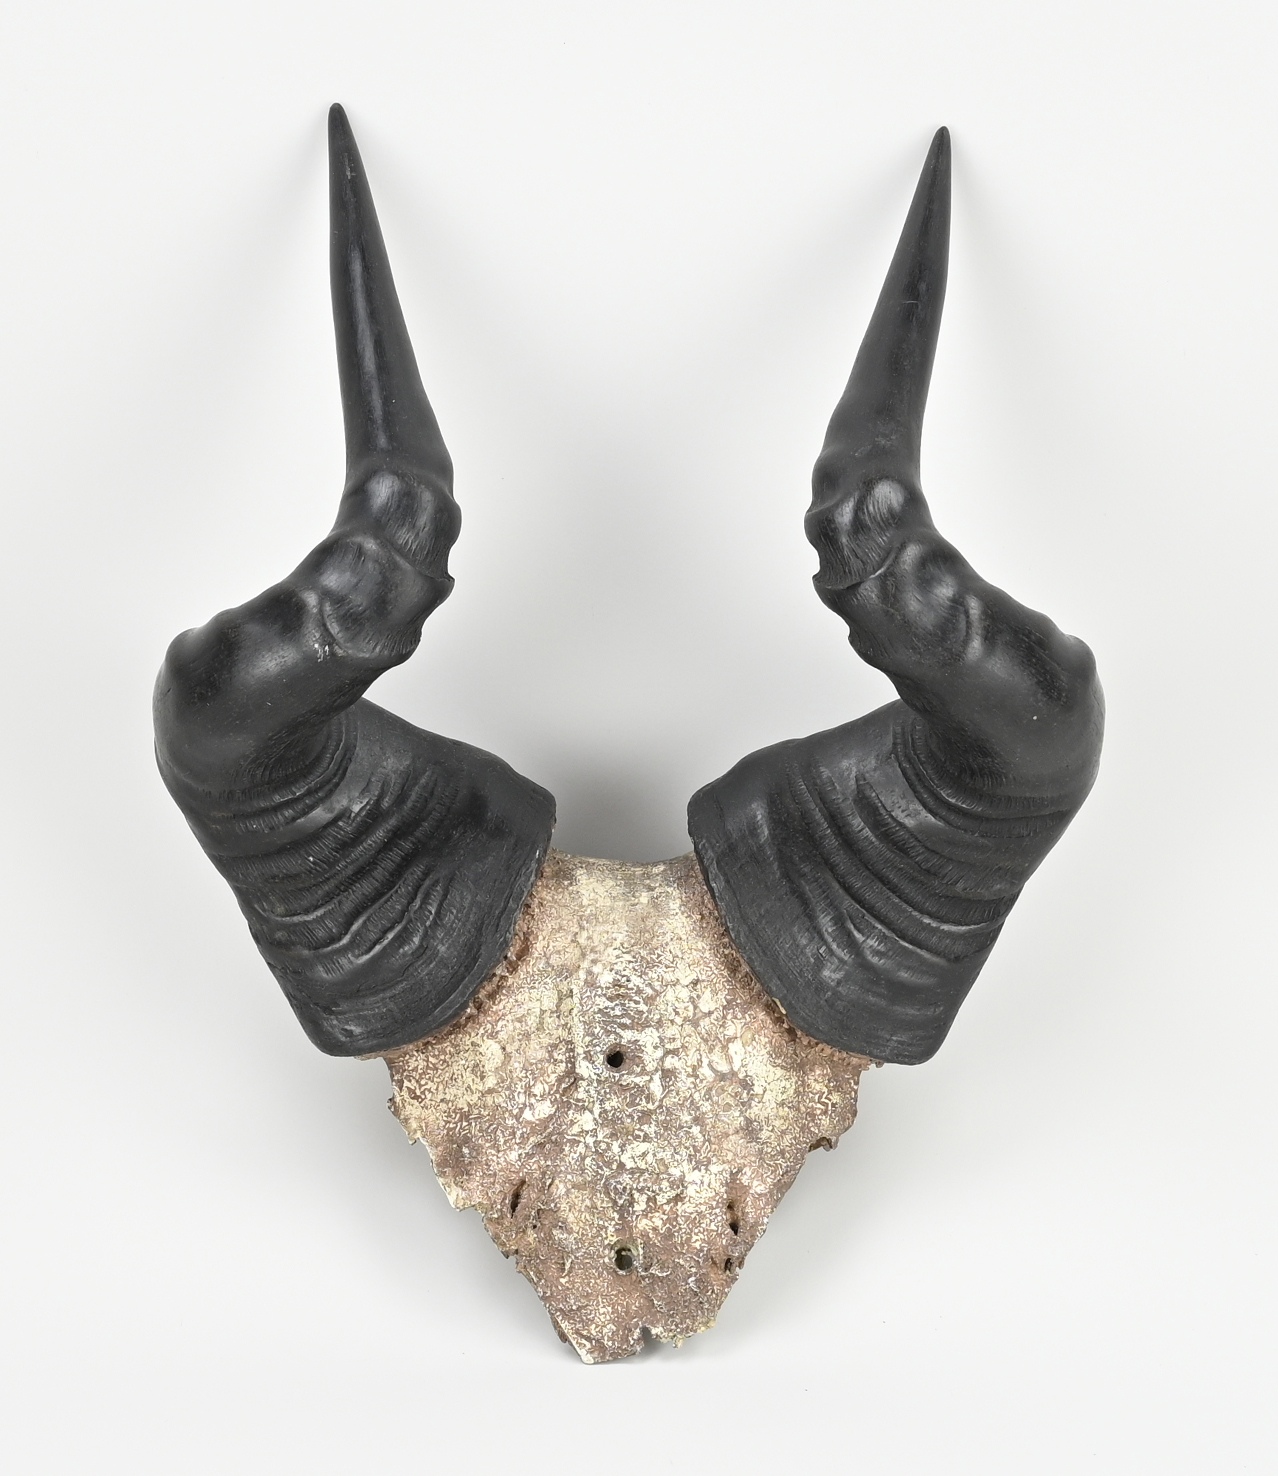 Old ram's head antler with skull